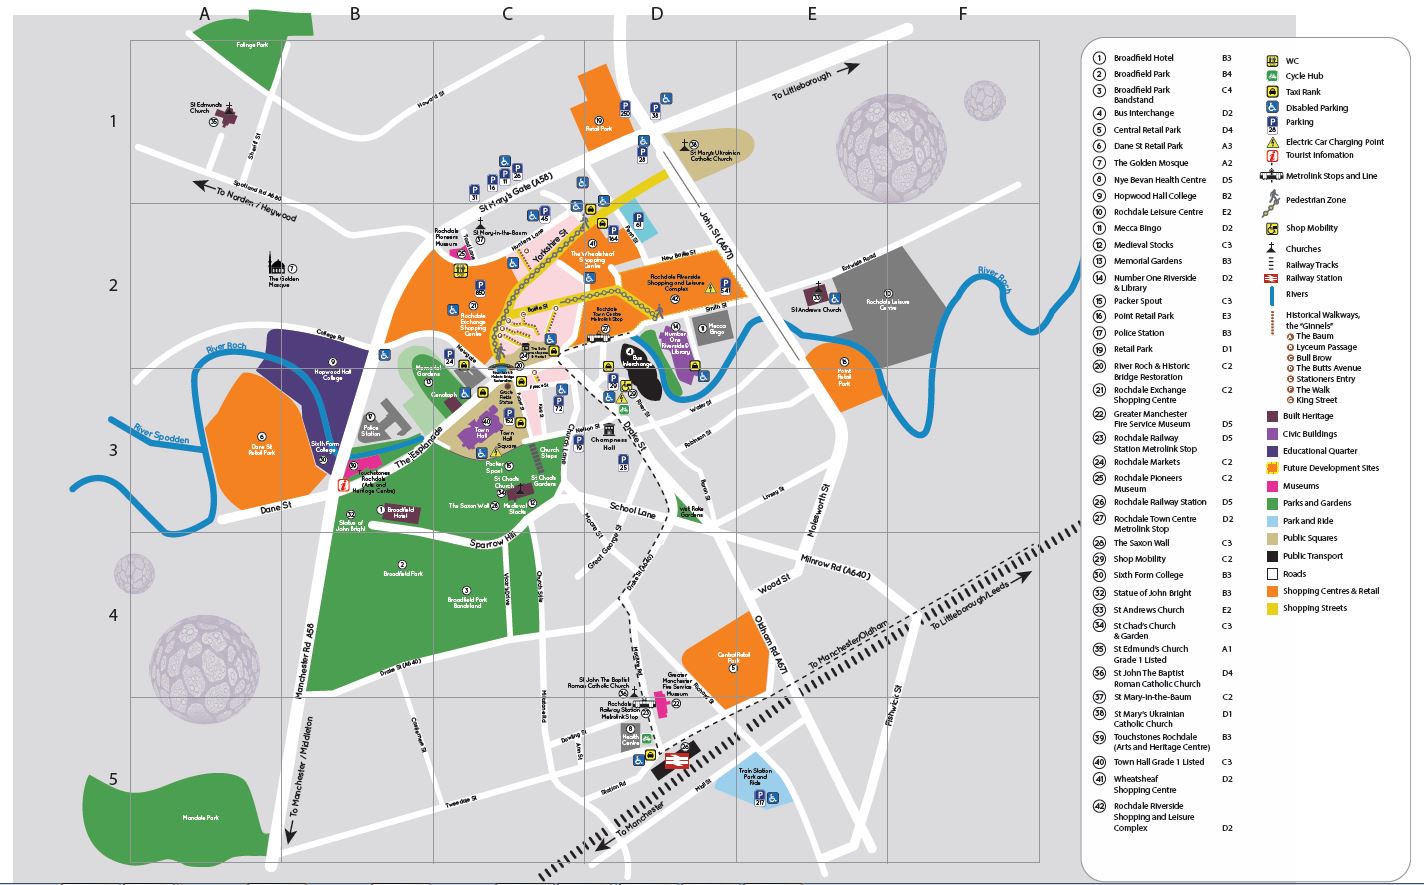 Rochdale Town Centre Map